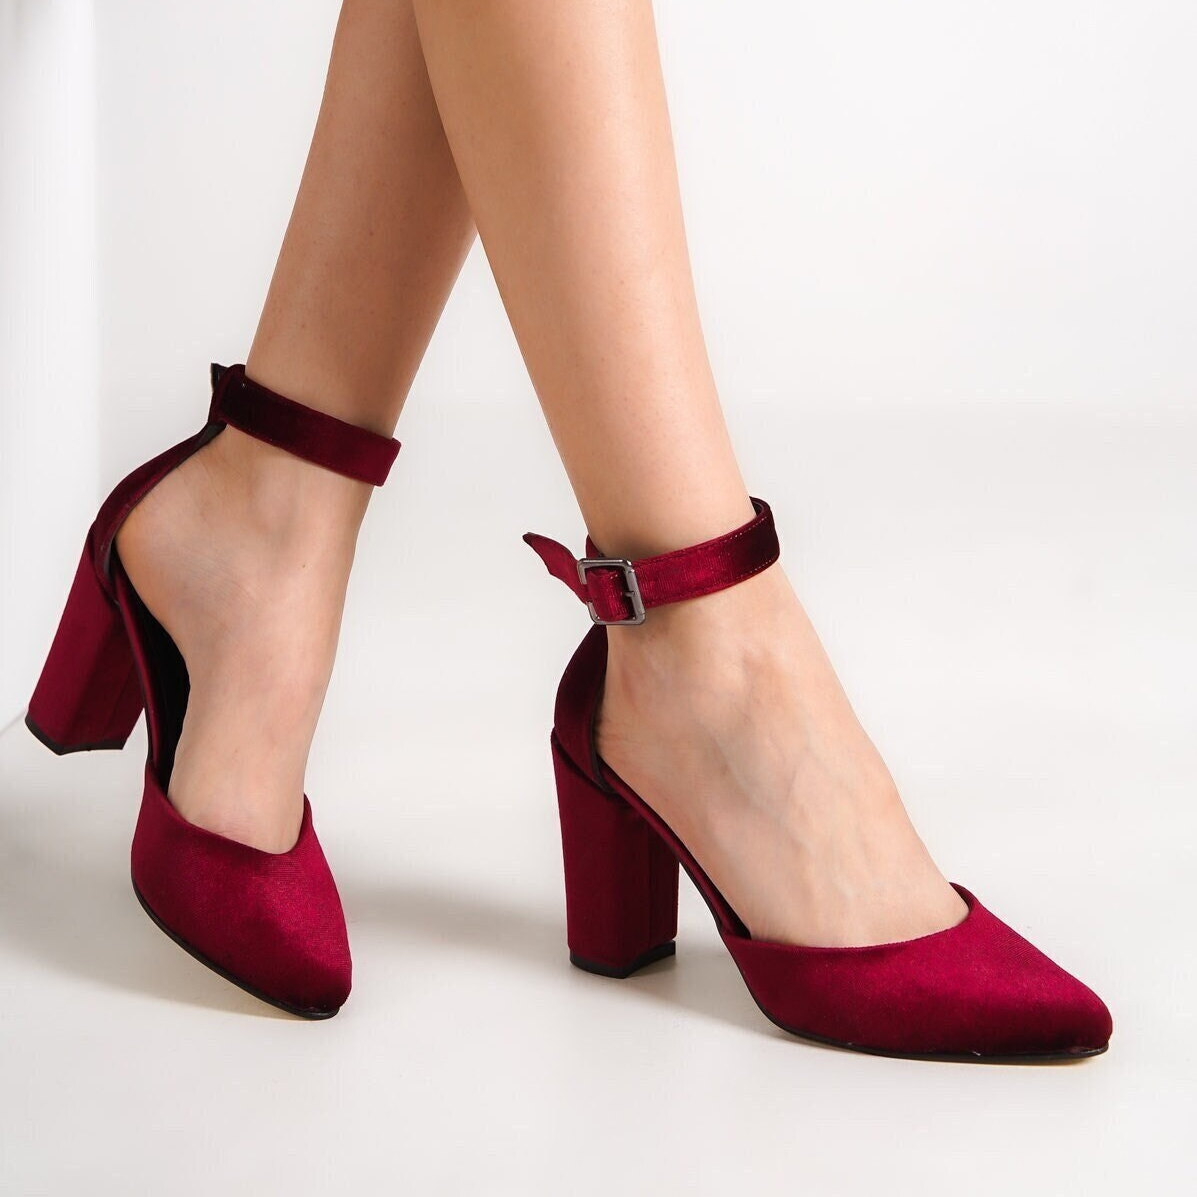 COLOUR CRUSH: BURGUNDY | Heels, Burgundy shoes, Womens fashion shoes